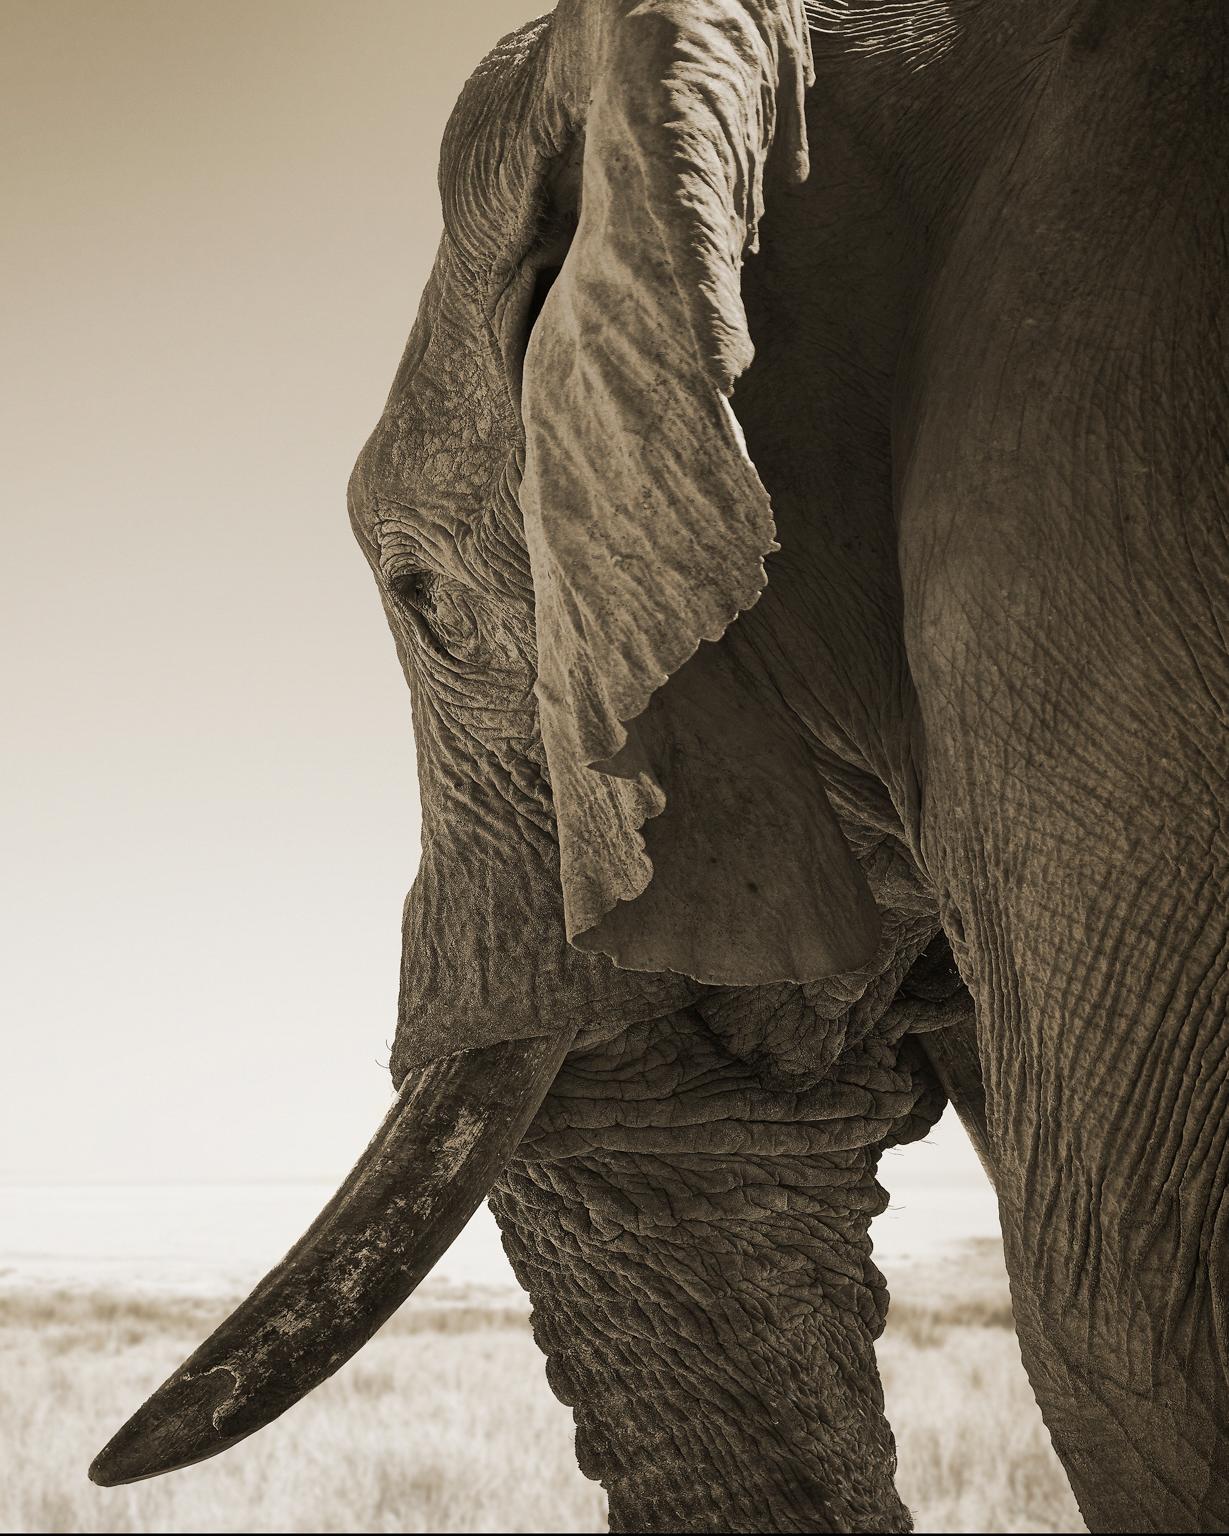 Elephant-02, Namibia - Black Portrait Photograph by Chris Gordaneer